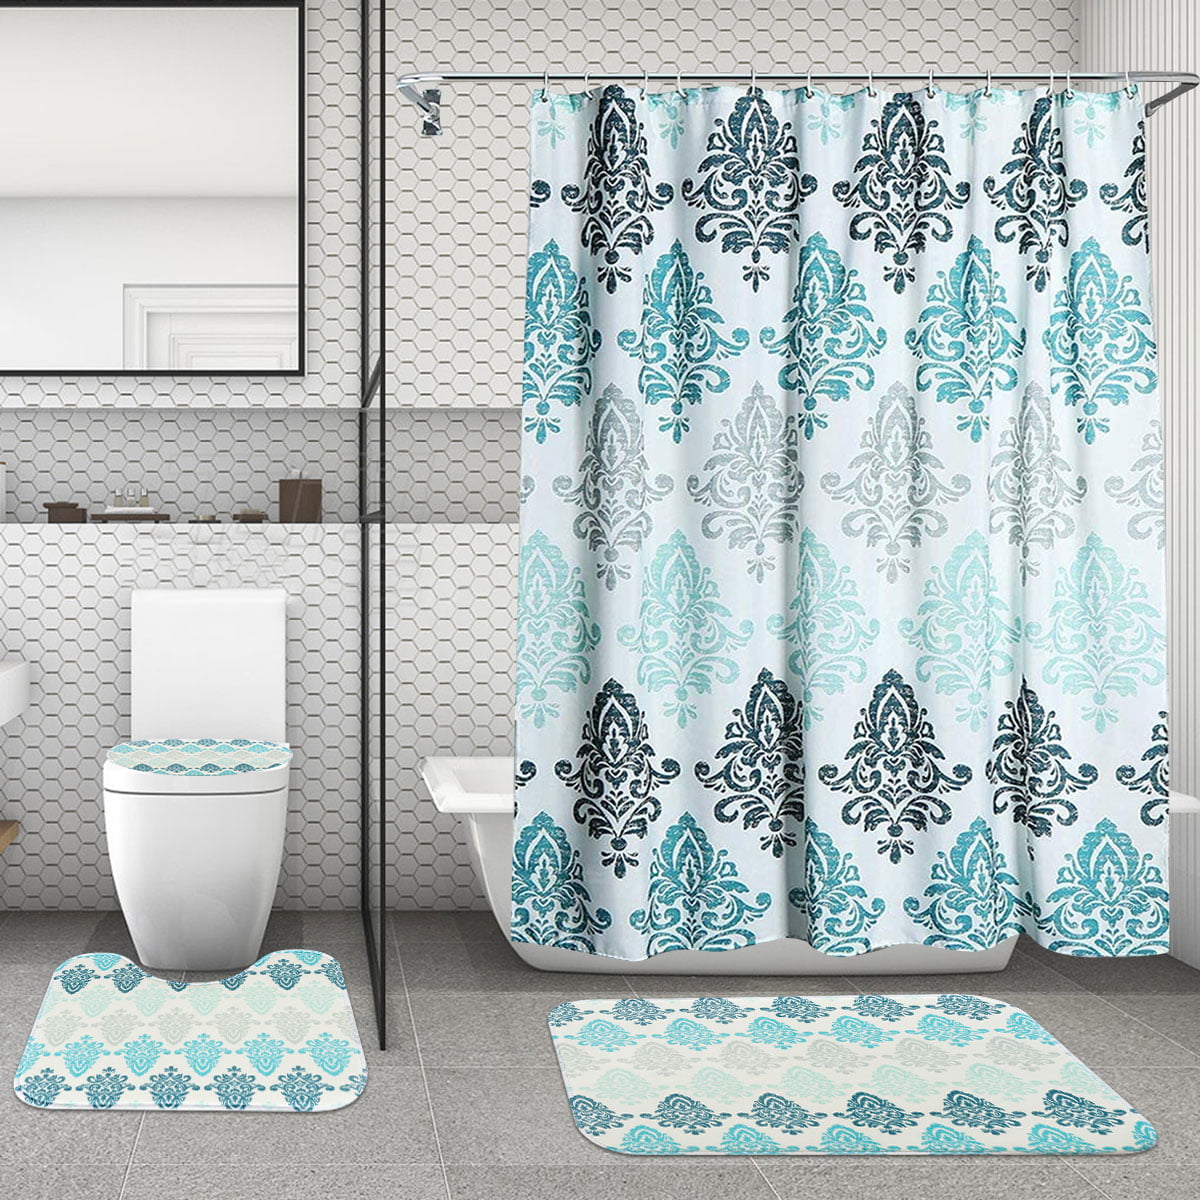 Details about   Waterproof Stone Reflection Shower Curtain Set Bathroom Toilet Four-piece Floor 